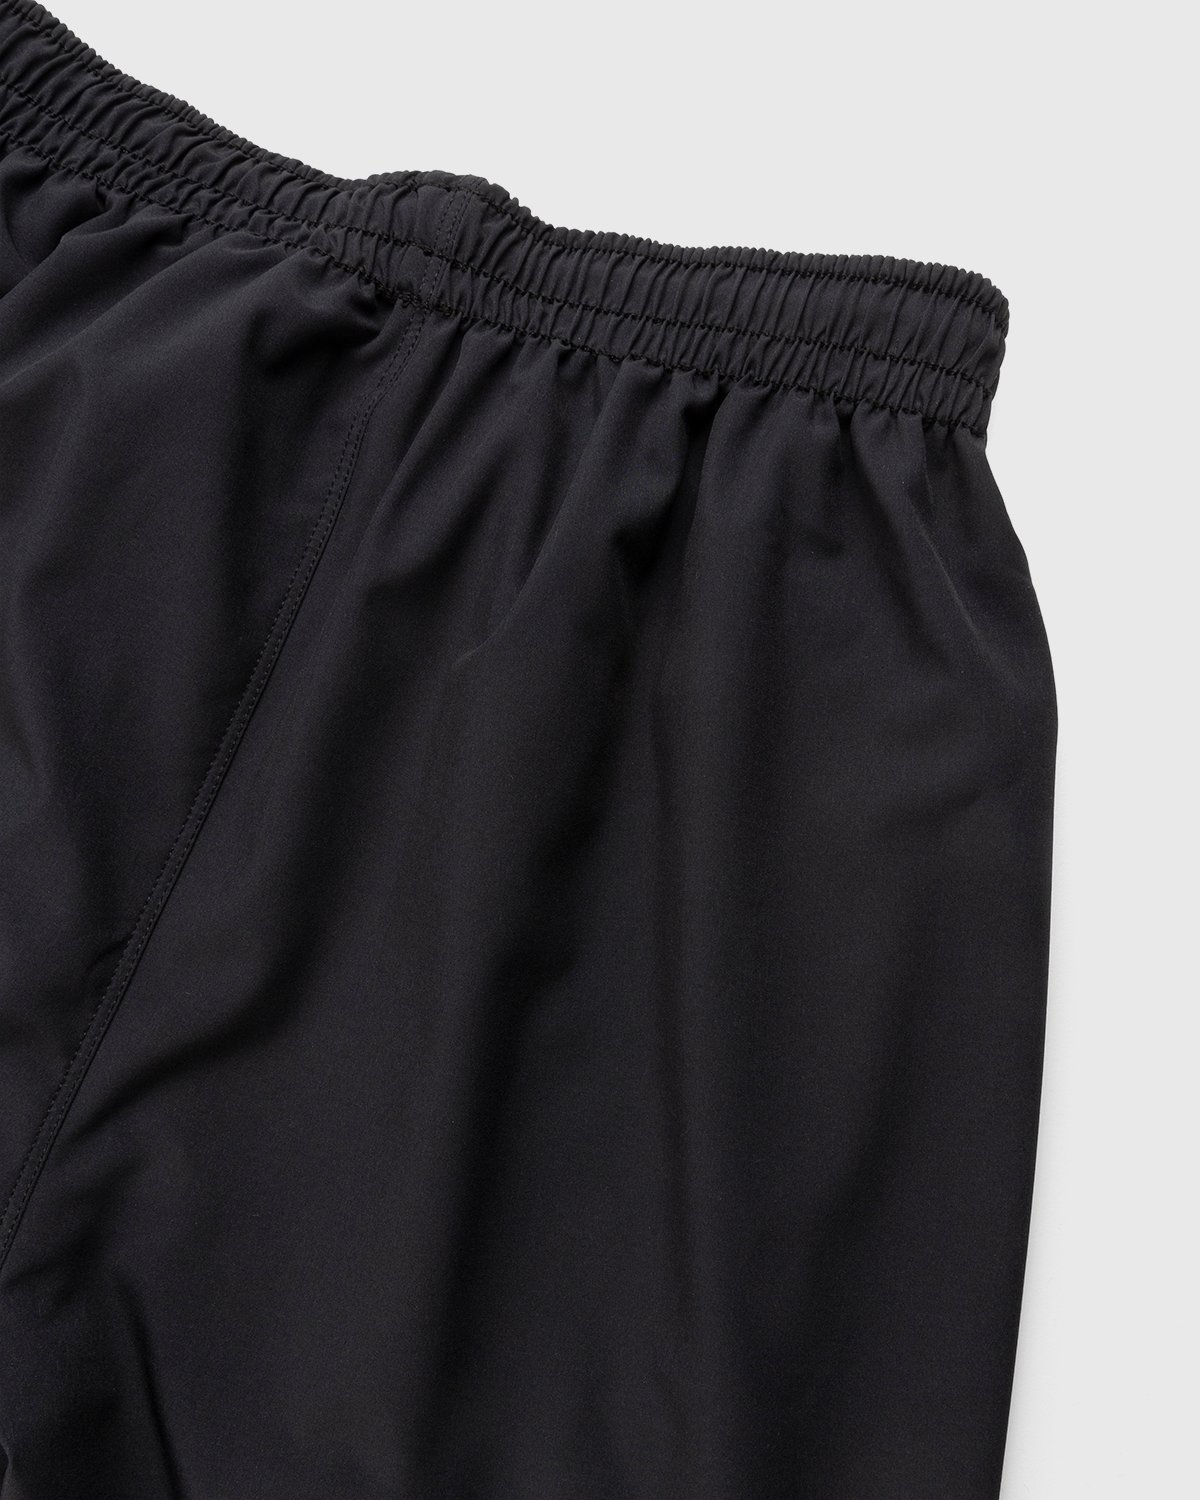 Highsnobiety - HS Sports Reversible Mesh Shorts Black/Khaki - Clothing - Green - Image 5